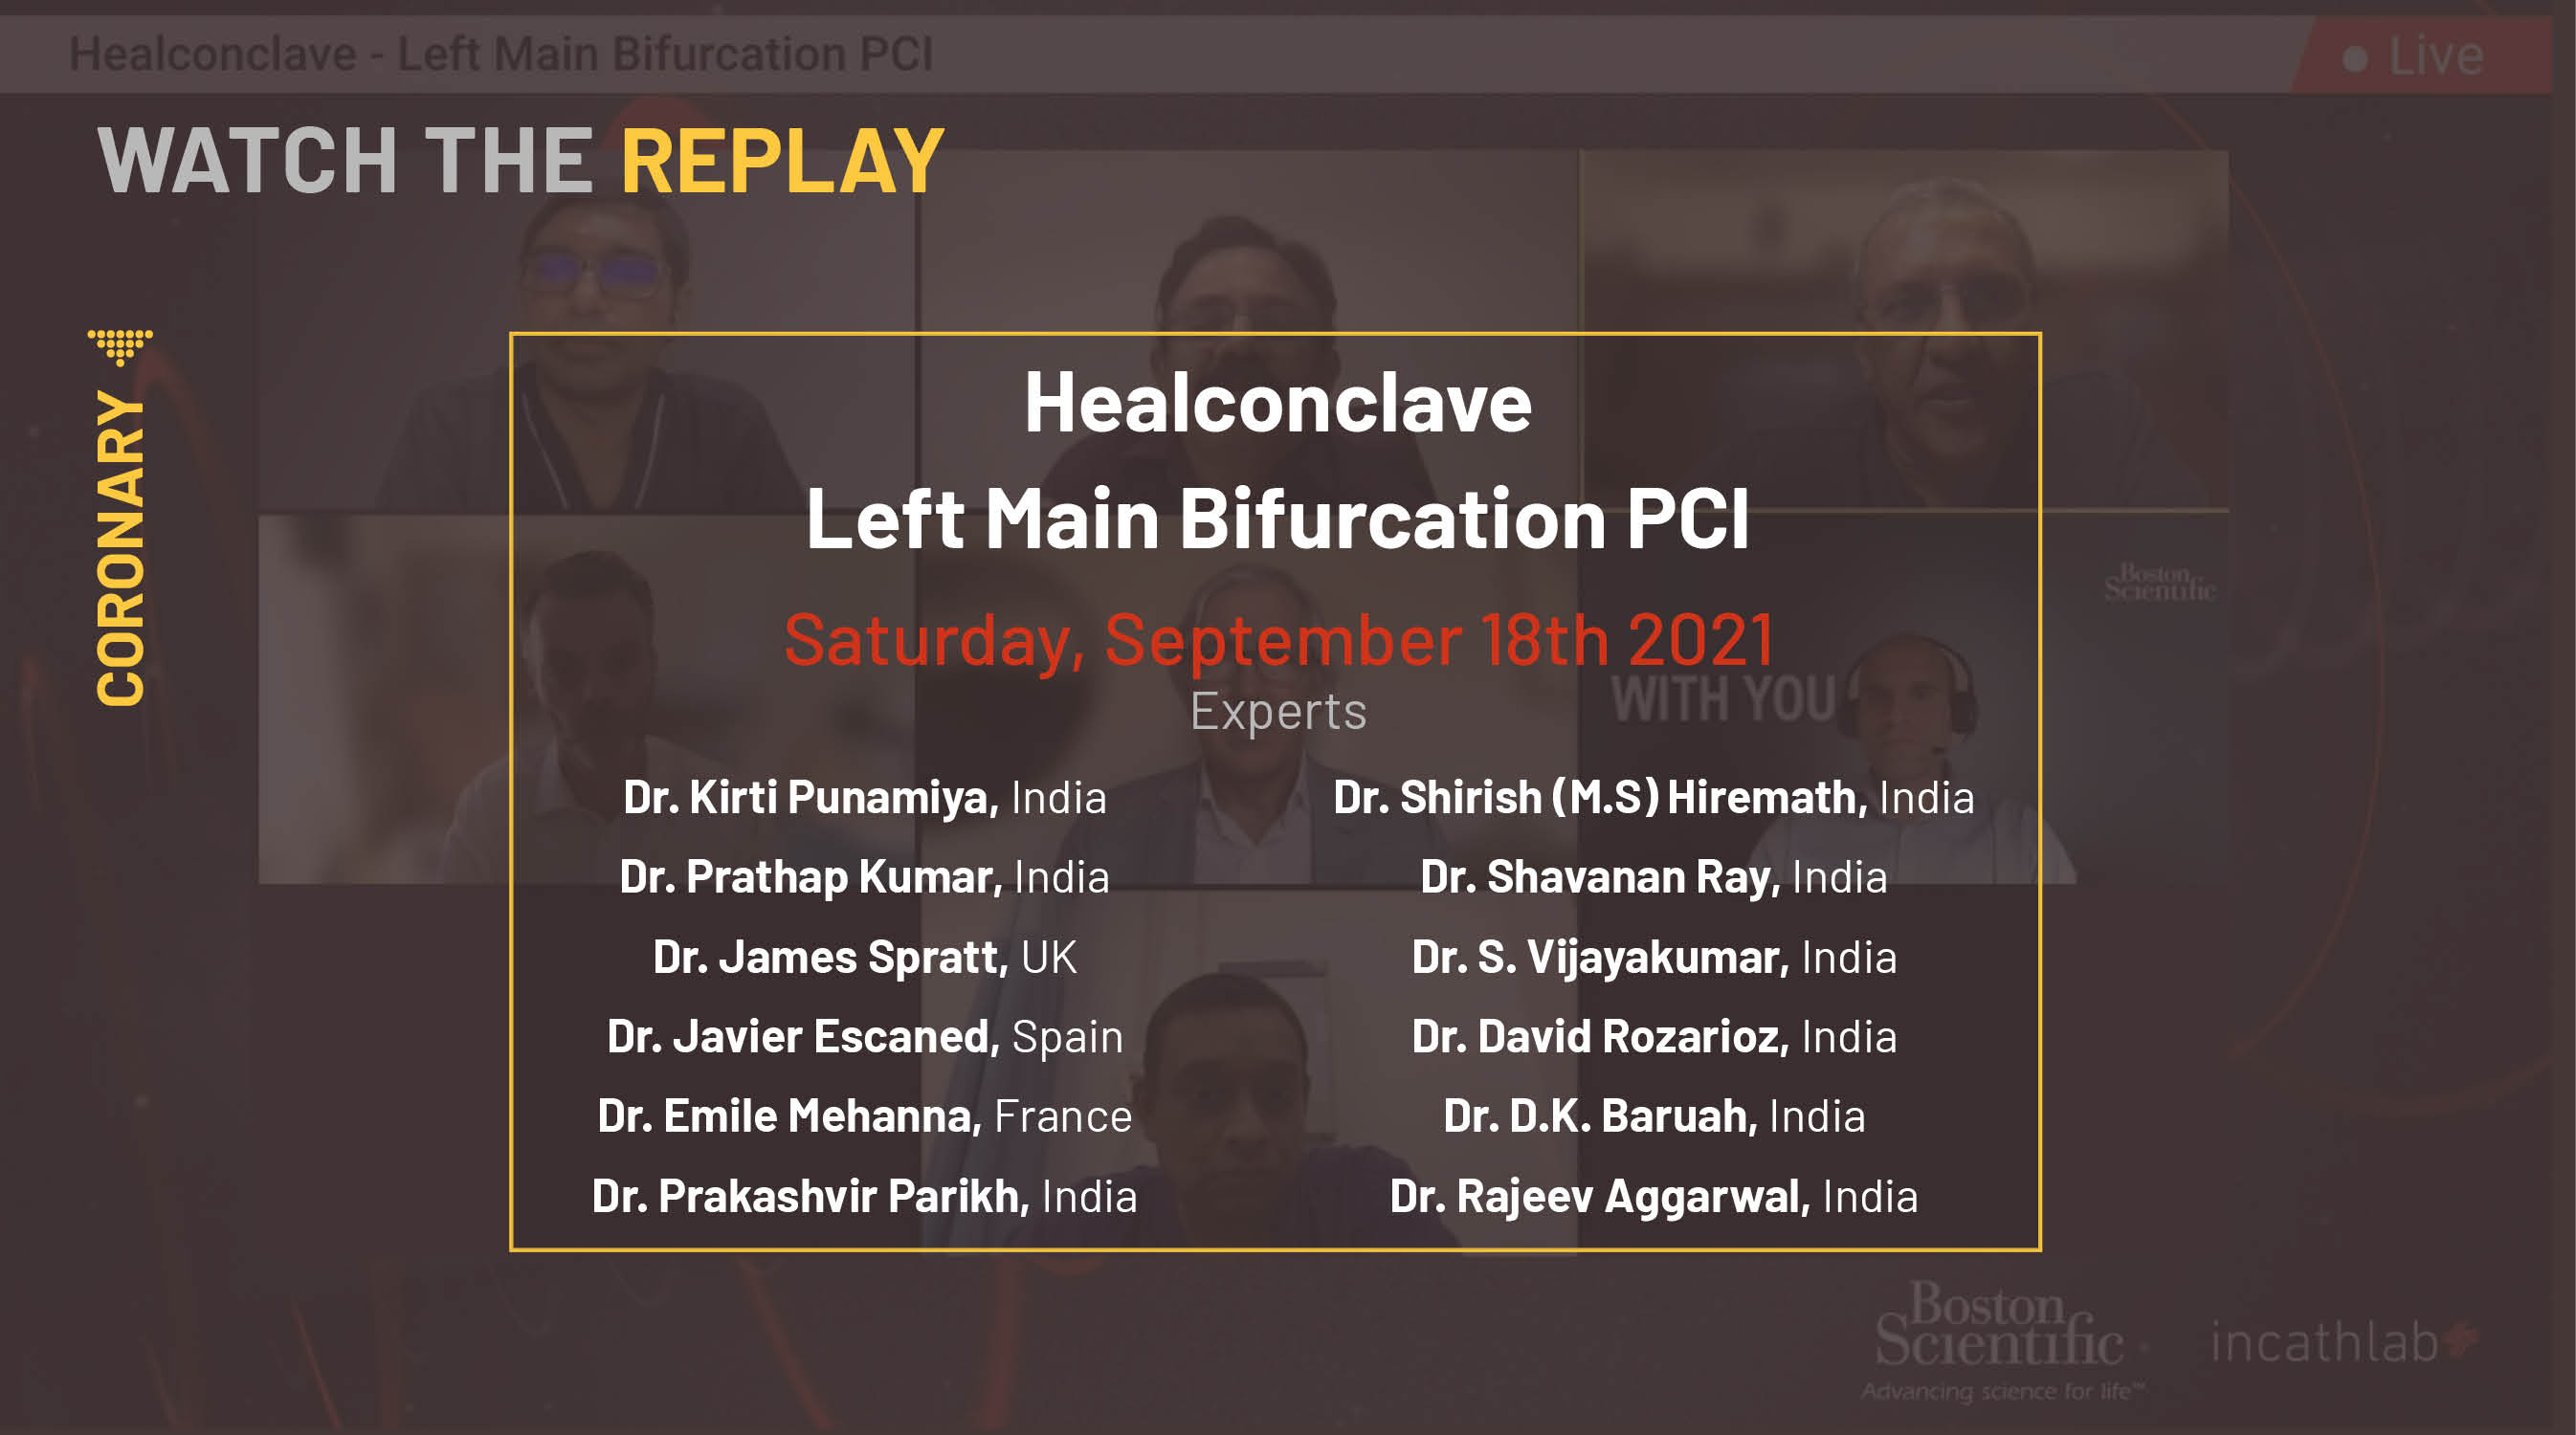 Heal Conclave - Left Main Bifurcation PCI